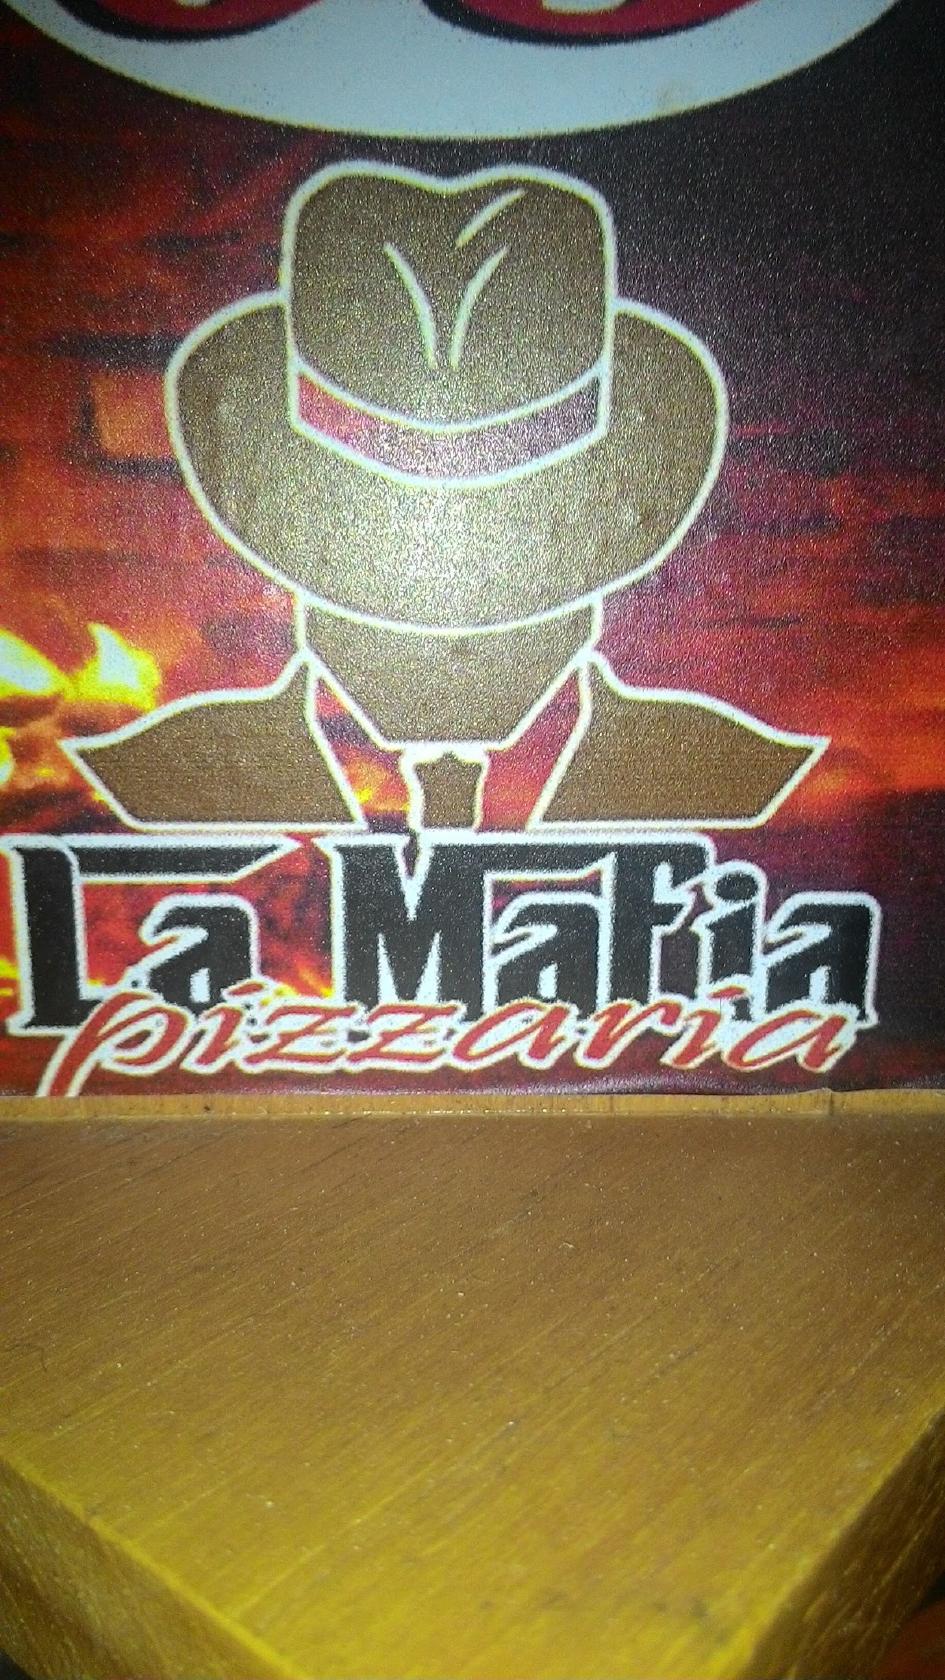 La Mafia Pizzaria LTDA - Cidade Nova - Caxias do sul